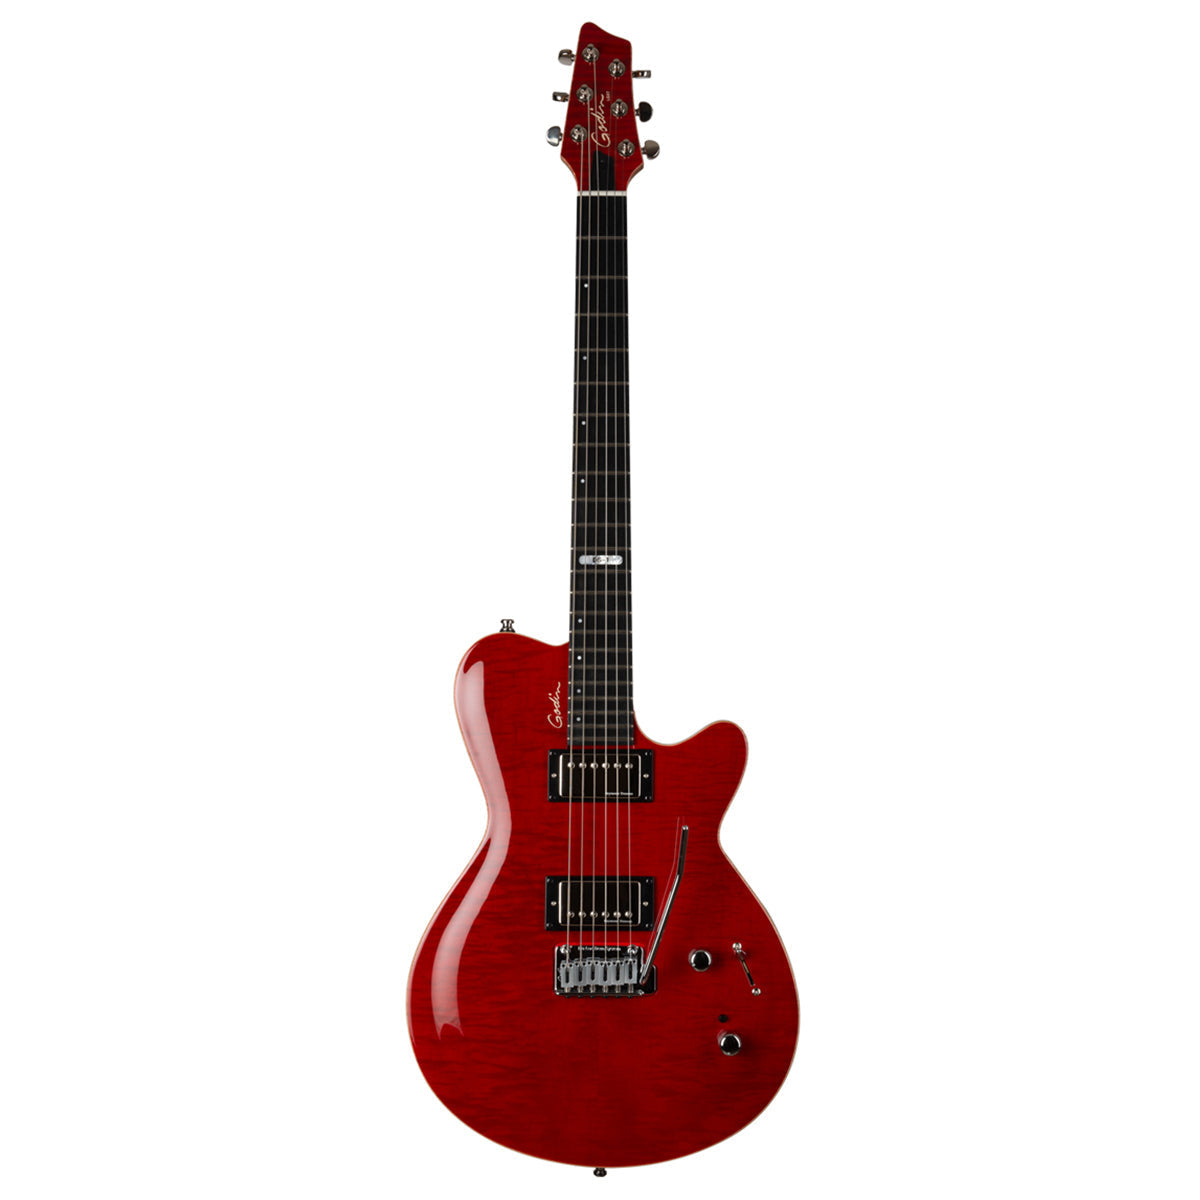 Electric Guitars - Godin DS-1 Daryl Stuermer Signature Electric Guitar